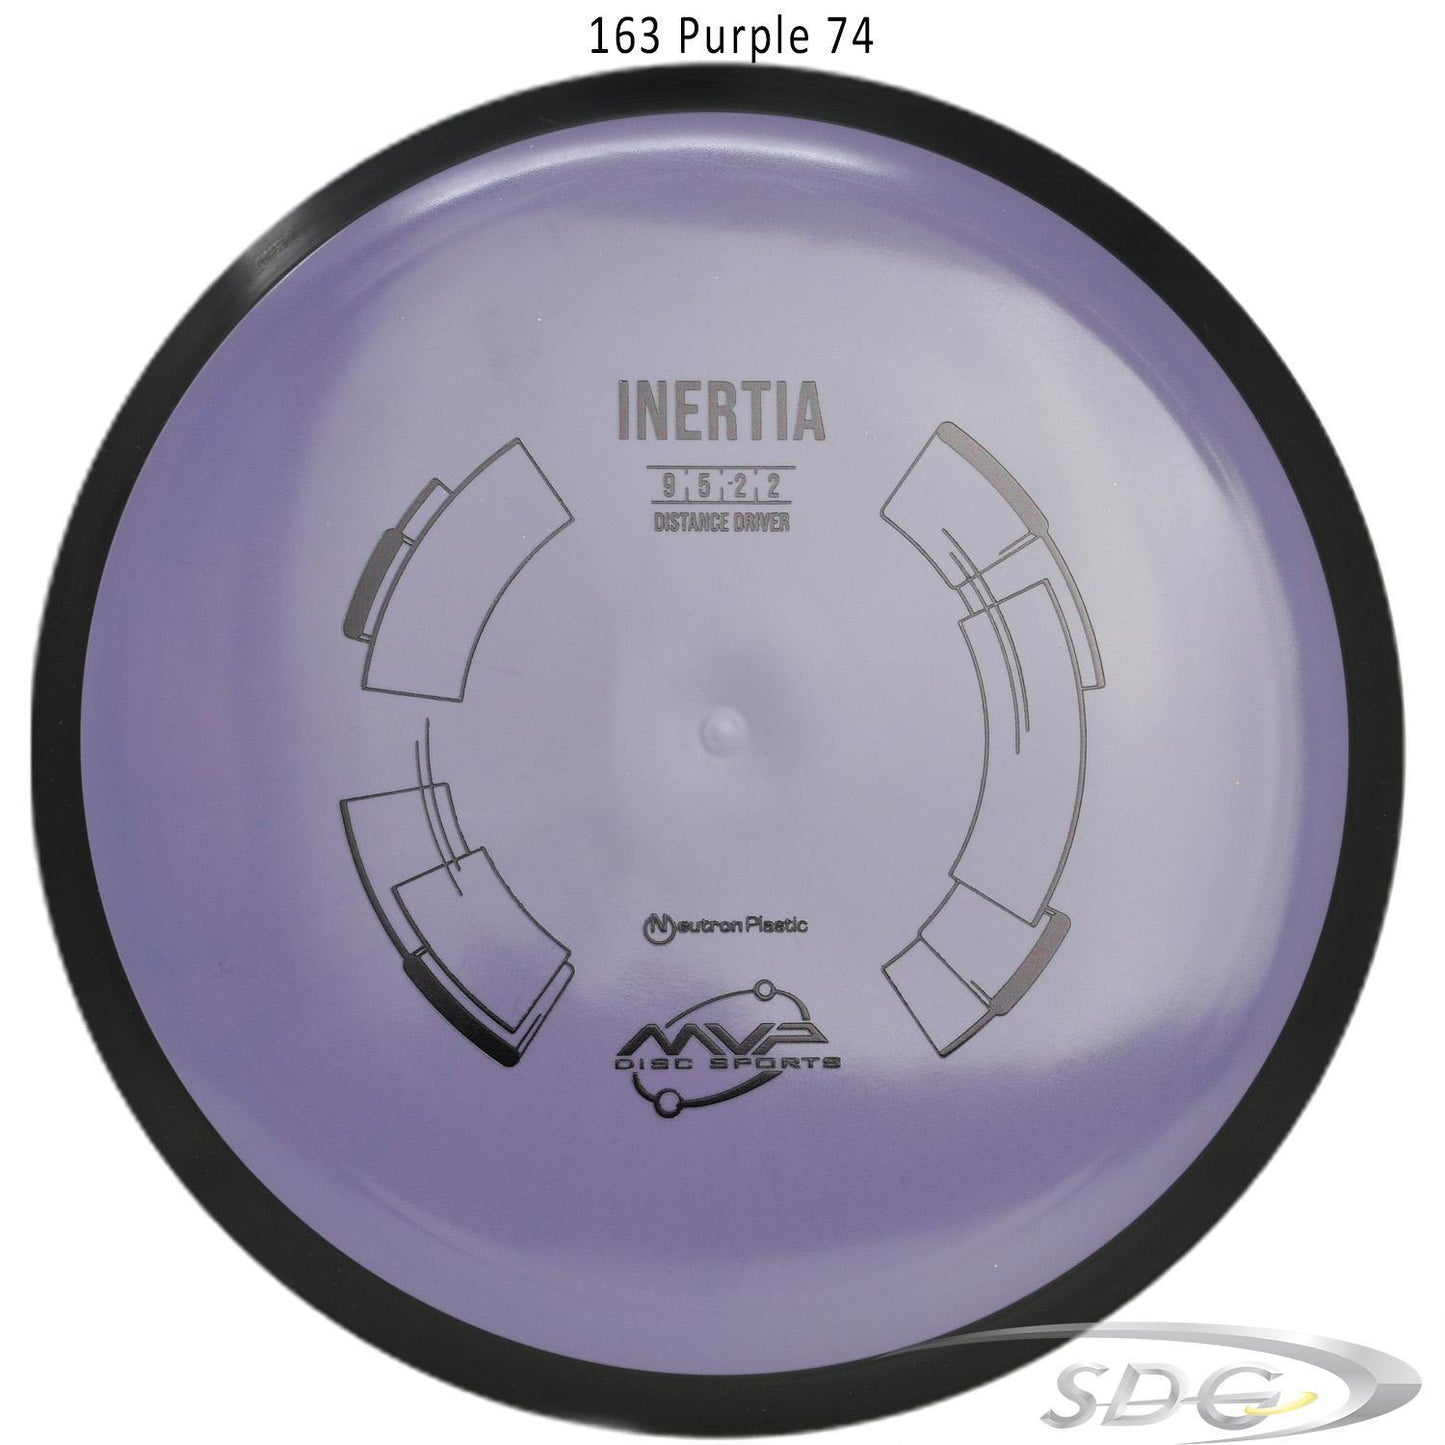 mvp-neutron-inertia-disc-golf-distance-driver 163 Purple 74 